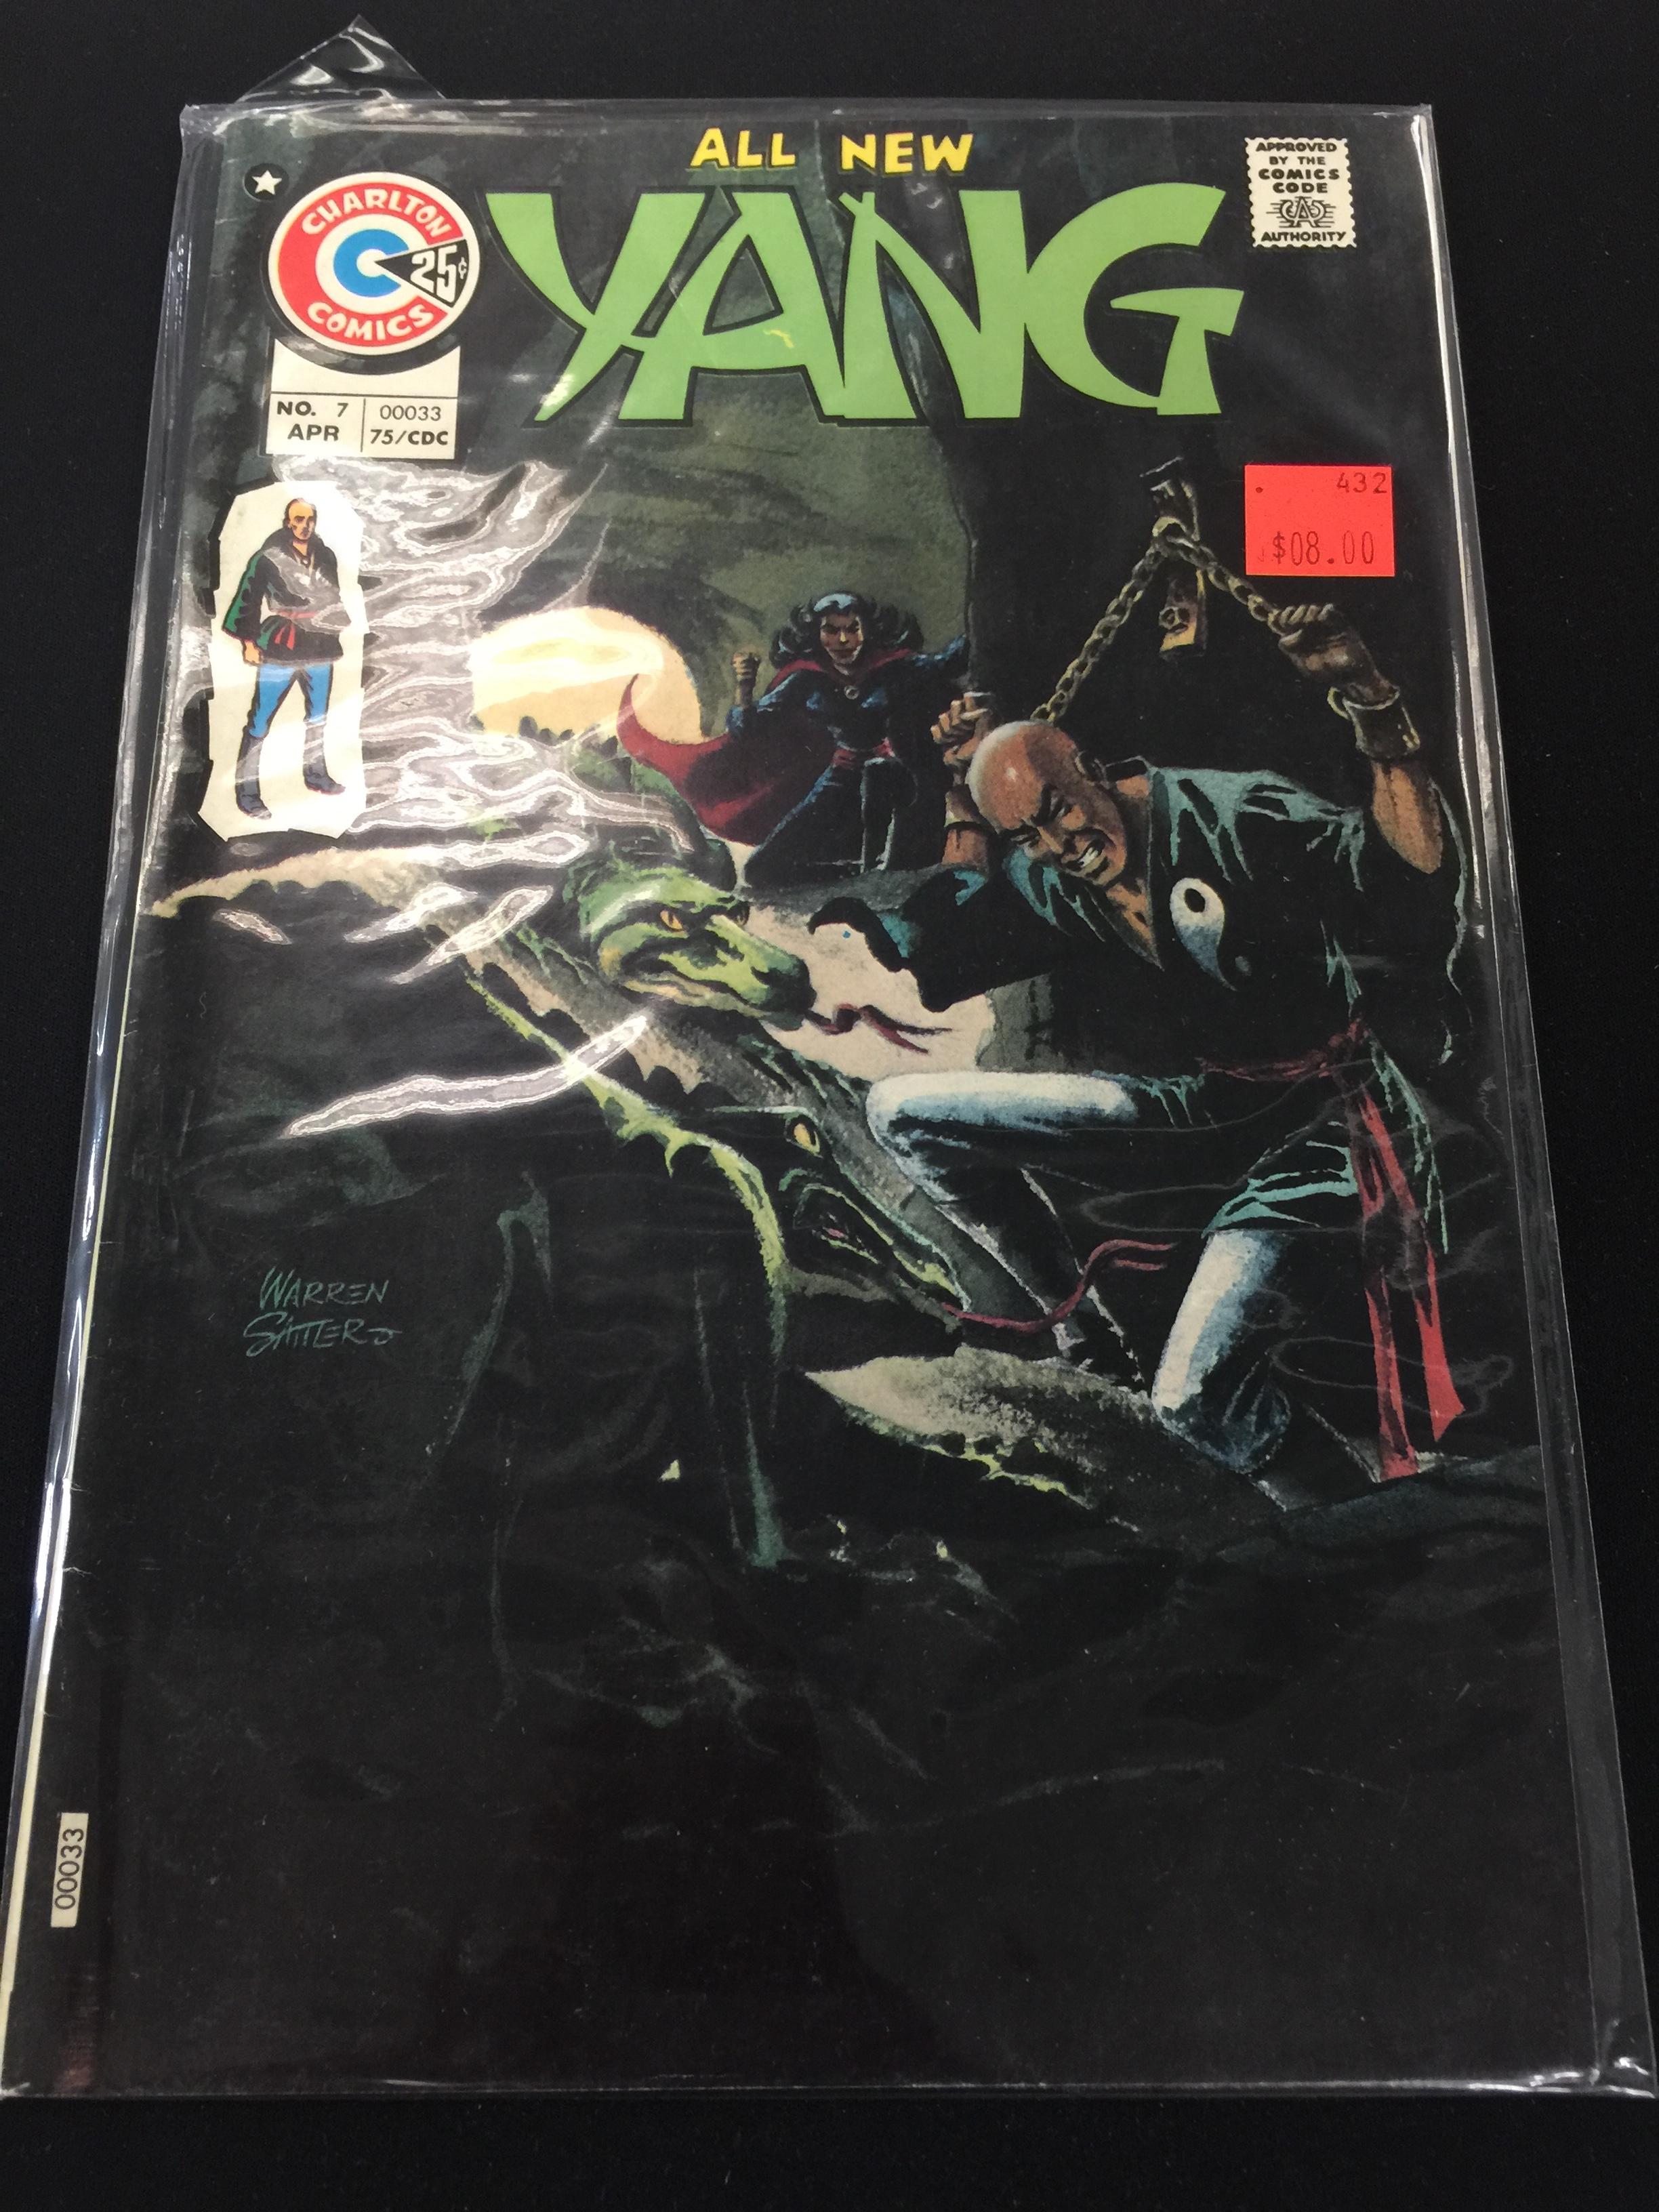 All New Yang #7-Charlton Comic Book